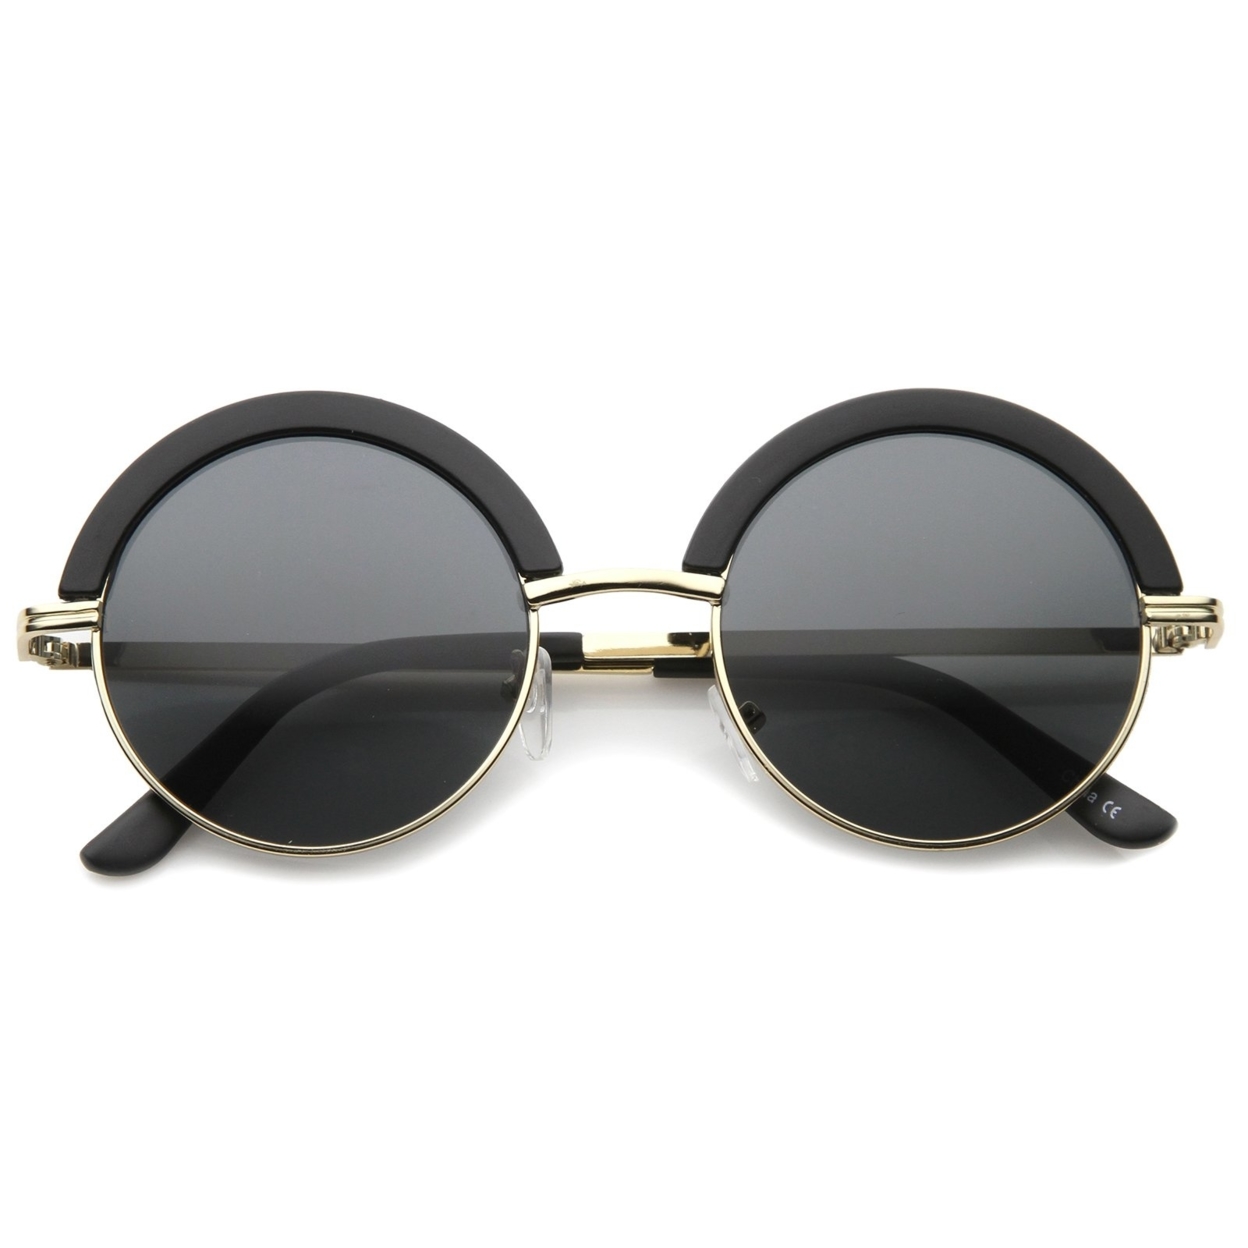 Mod Fashion Oversize Half-Frame Brow Eyelid Round Sunglasses 50mm - Shiny Black-Silver / Smoke